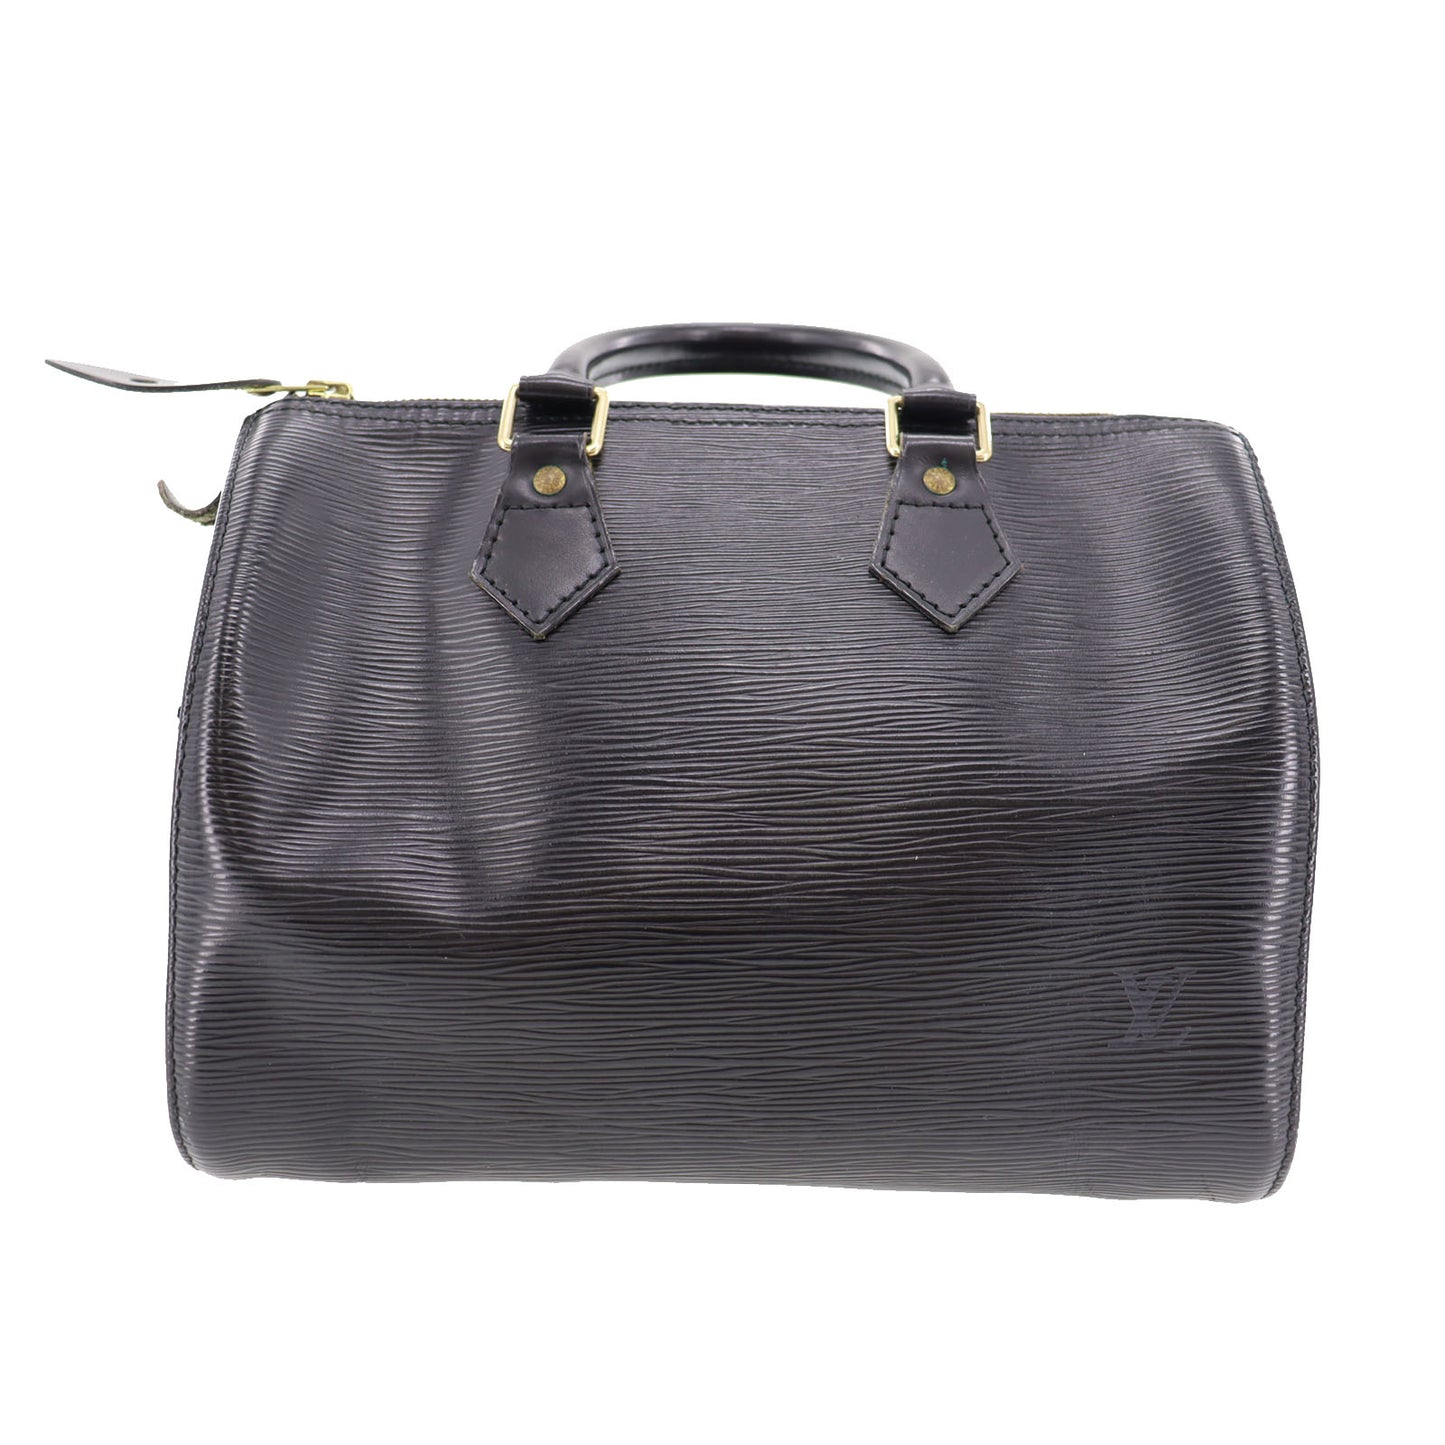 LOUIS VUITTON Handbag M59032 Speedy 25 Epi Leather Black Women